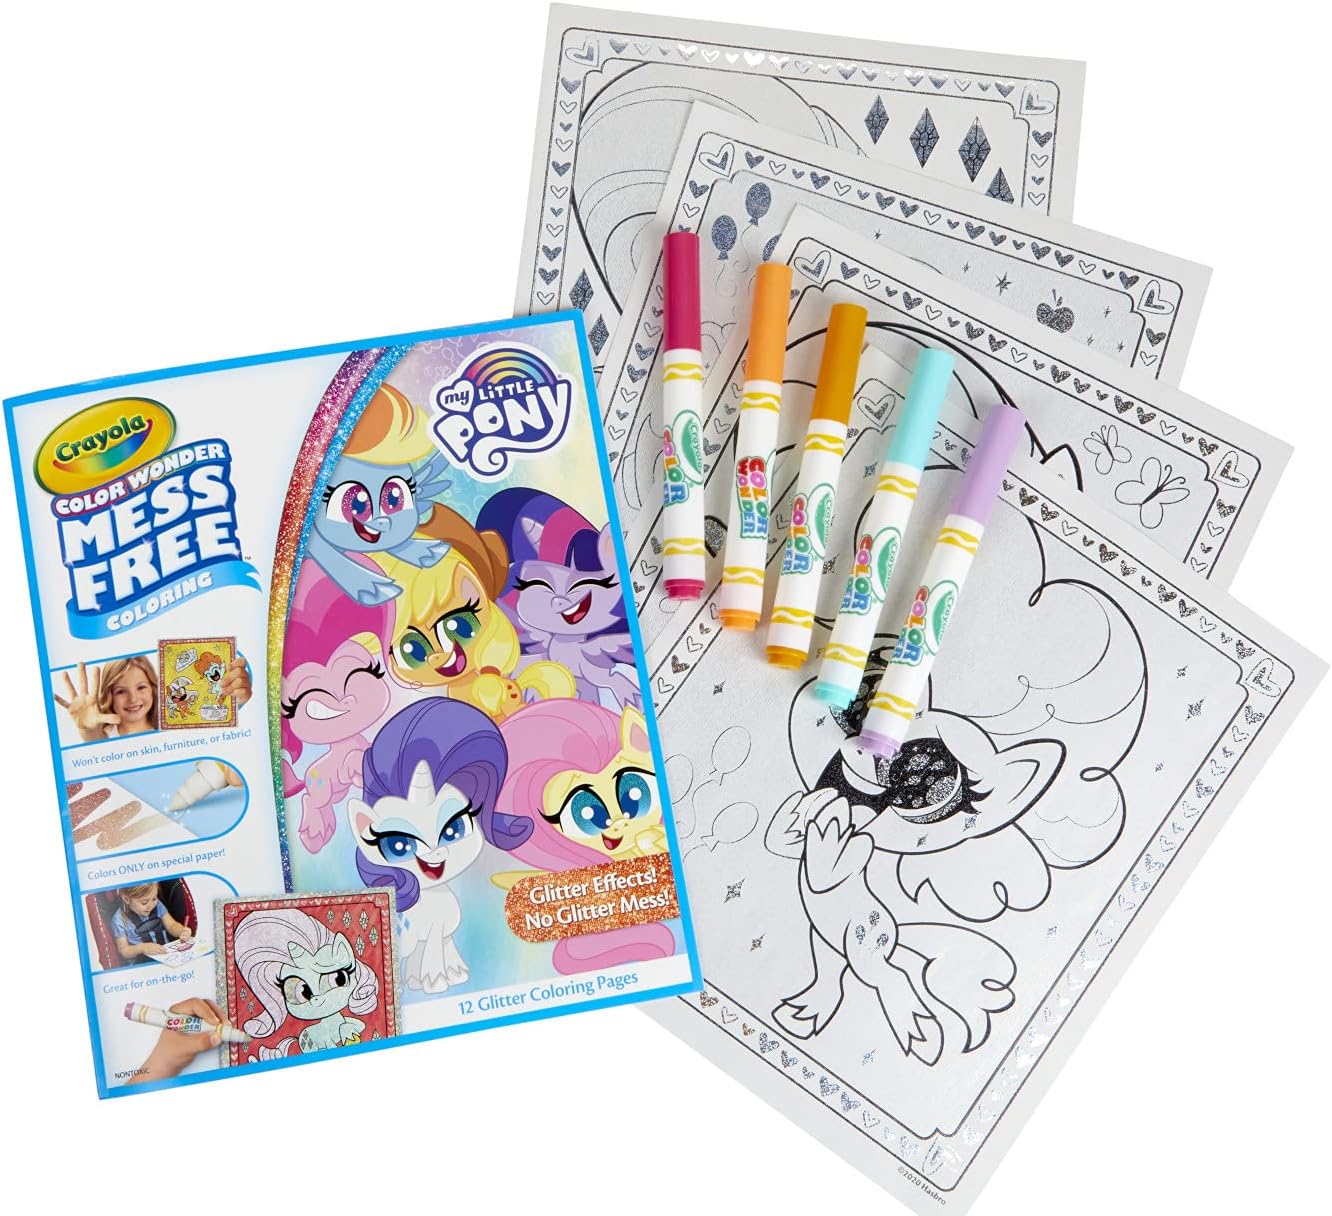 Crayola Color Wonder Mess Free My Little Pony Glitter Paper & Marker